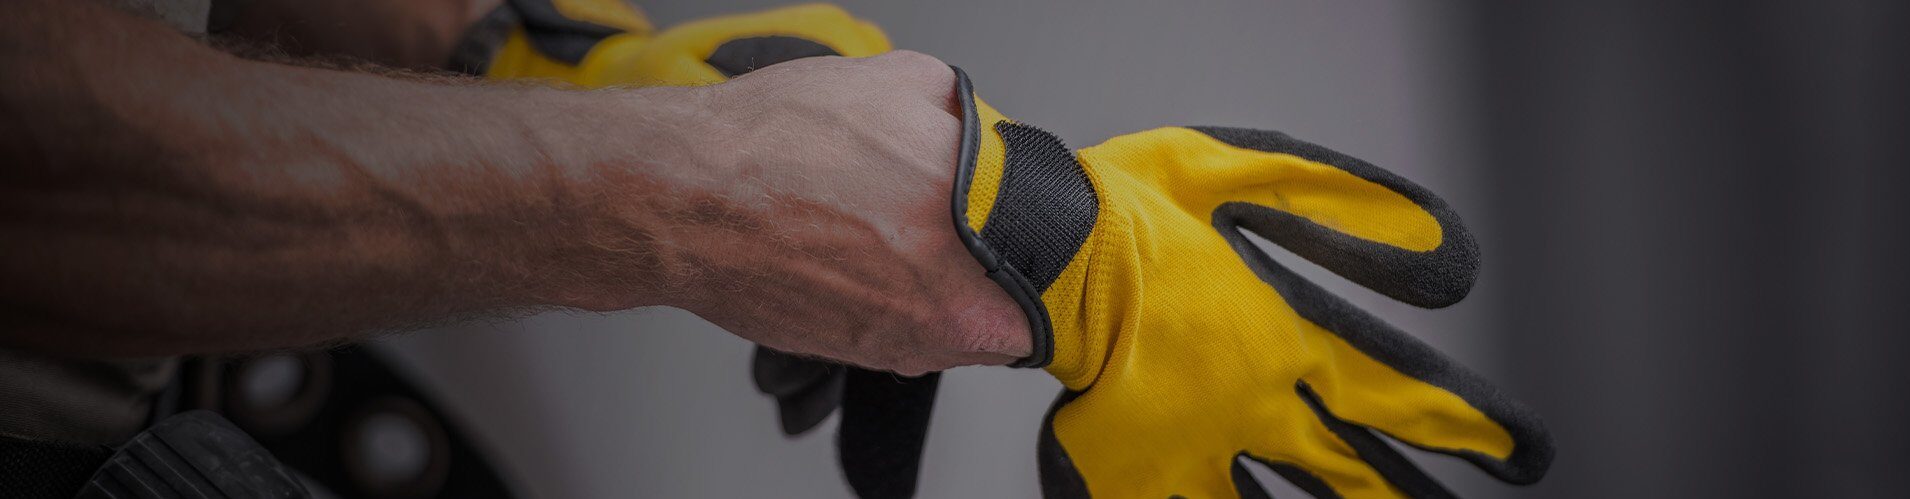 Glove Materials